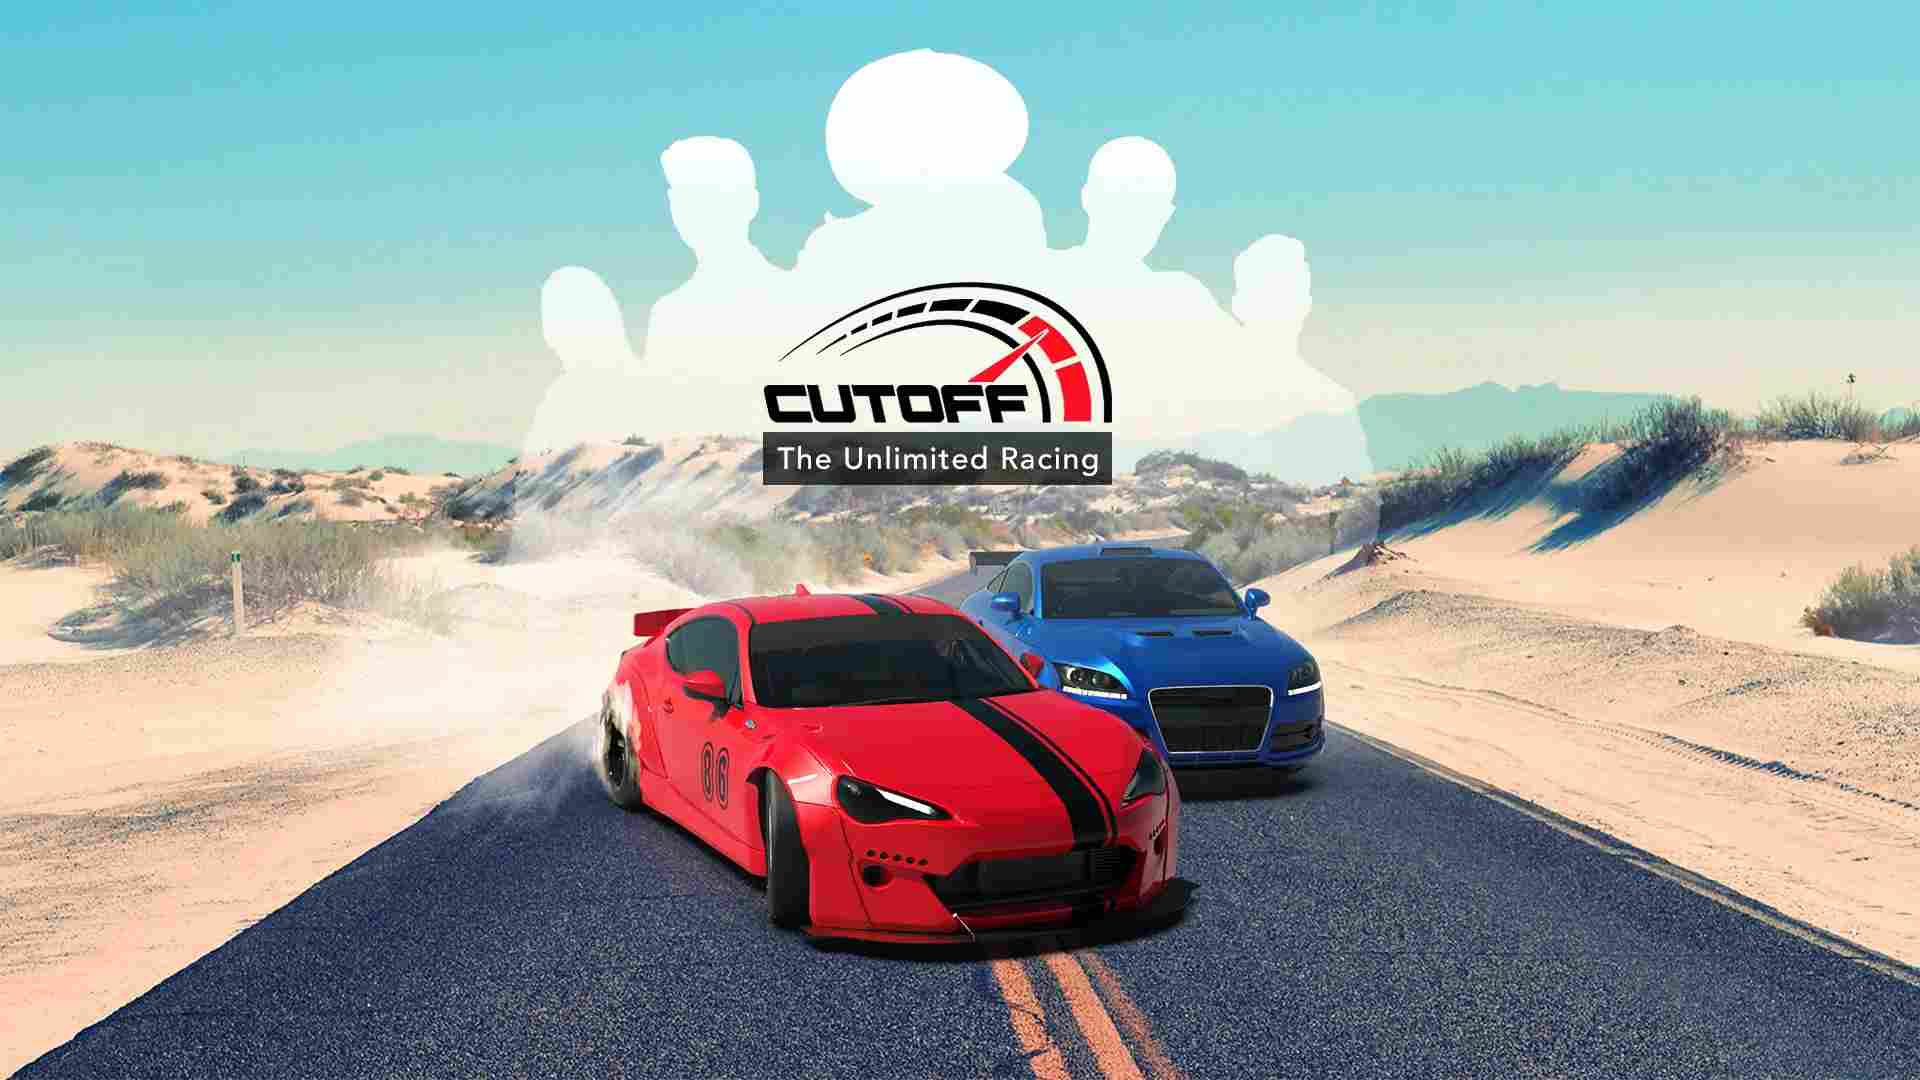 CutOff Online Racing 2.4.4 APK MOD [Menu LMH, Huge Amount Of Money Gold Cash]